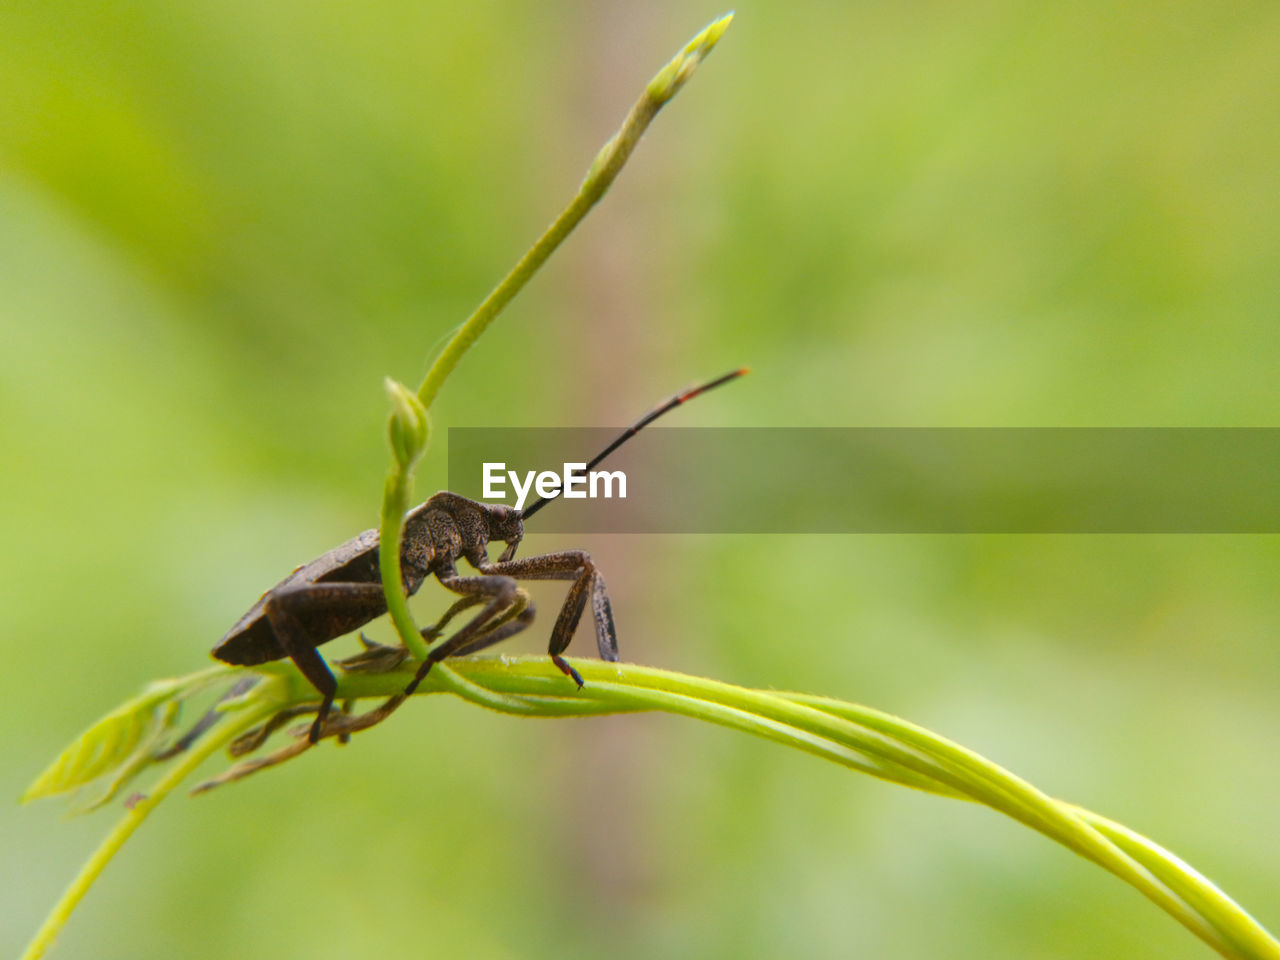 Cyanea brwon beetle